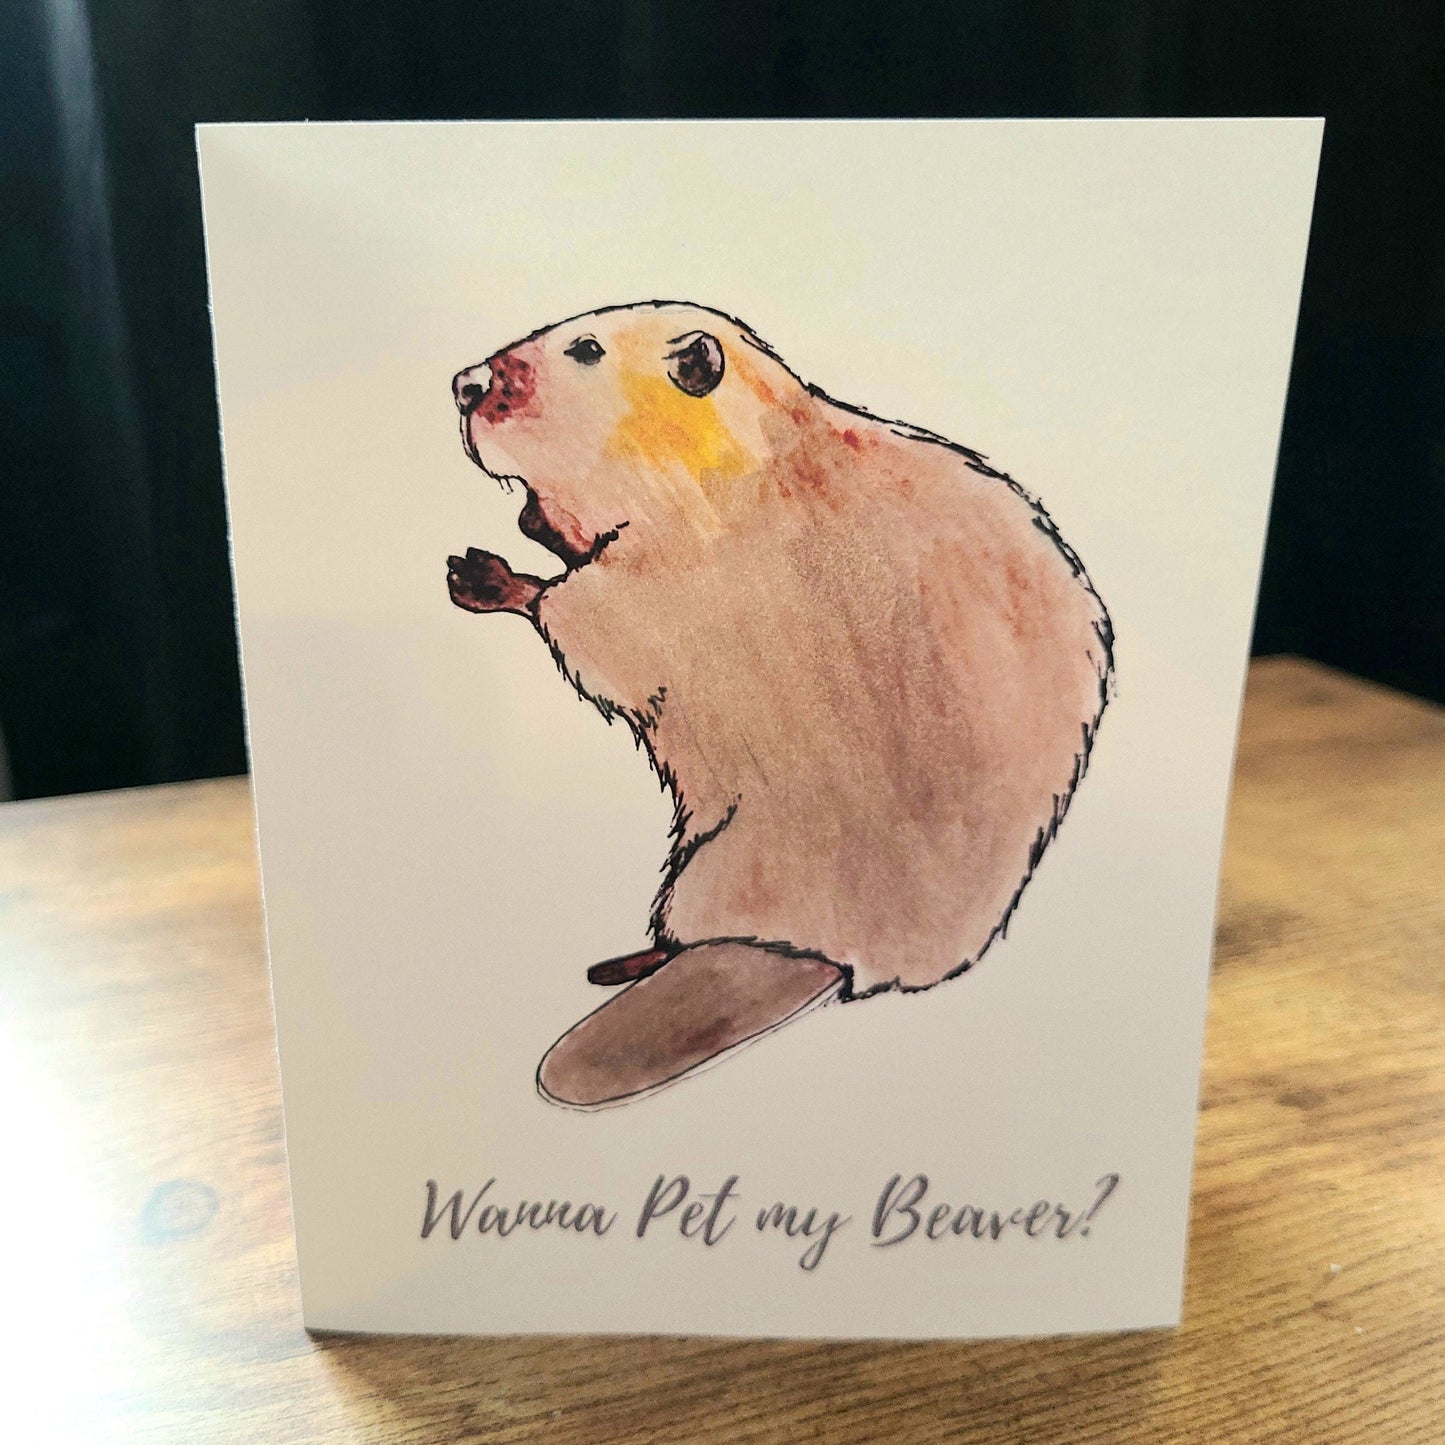 Wanna pet my beaver?, Funny beaver card, Funny Valentine, Beaver pun anniversary, Rude cards, Cute cards, Boyfriend, Husband, Partner, Love